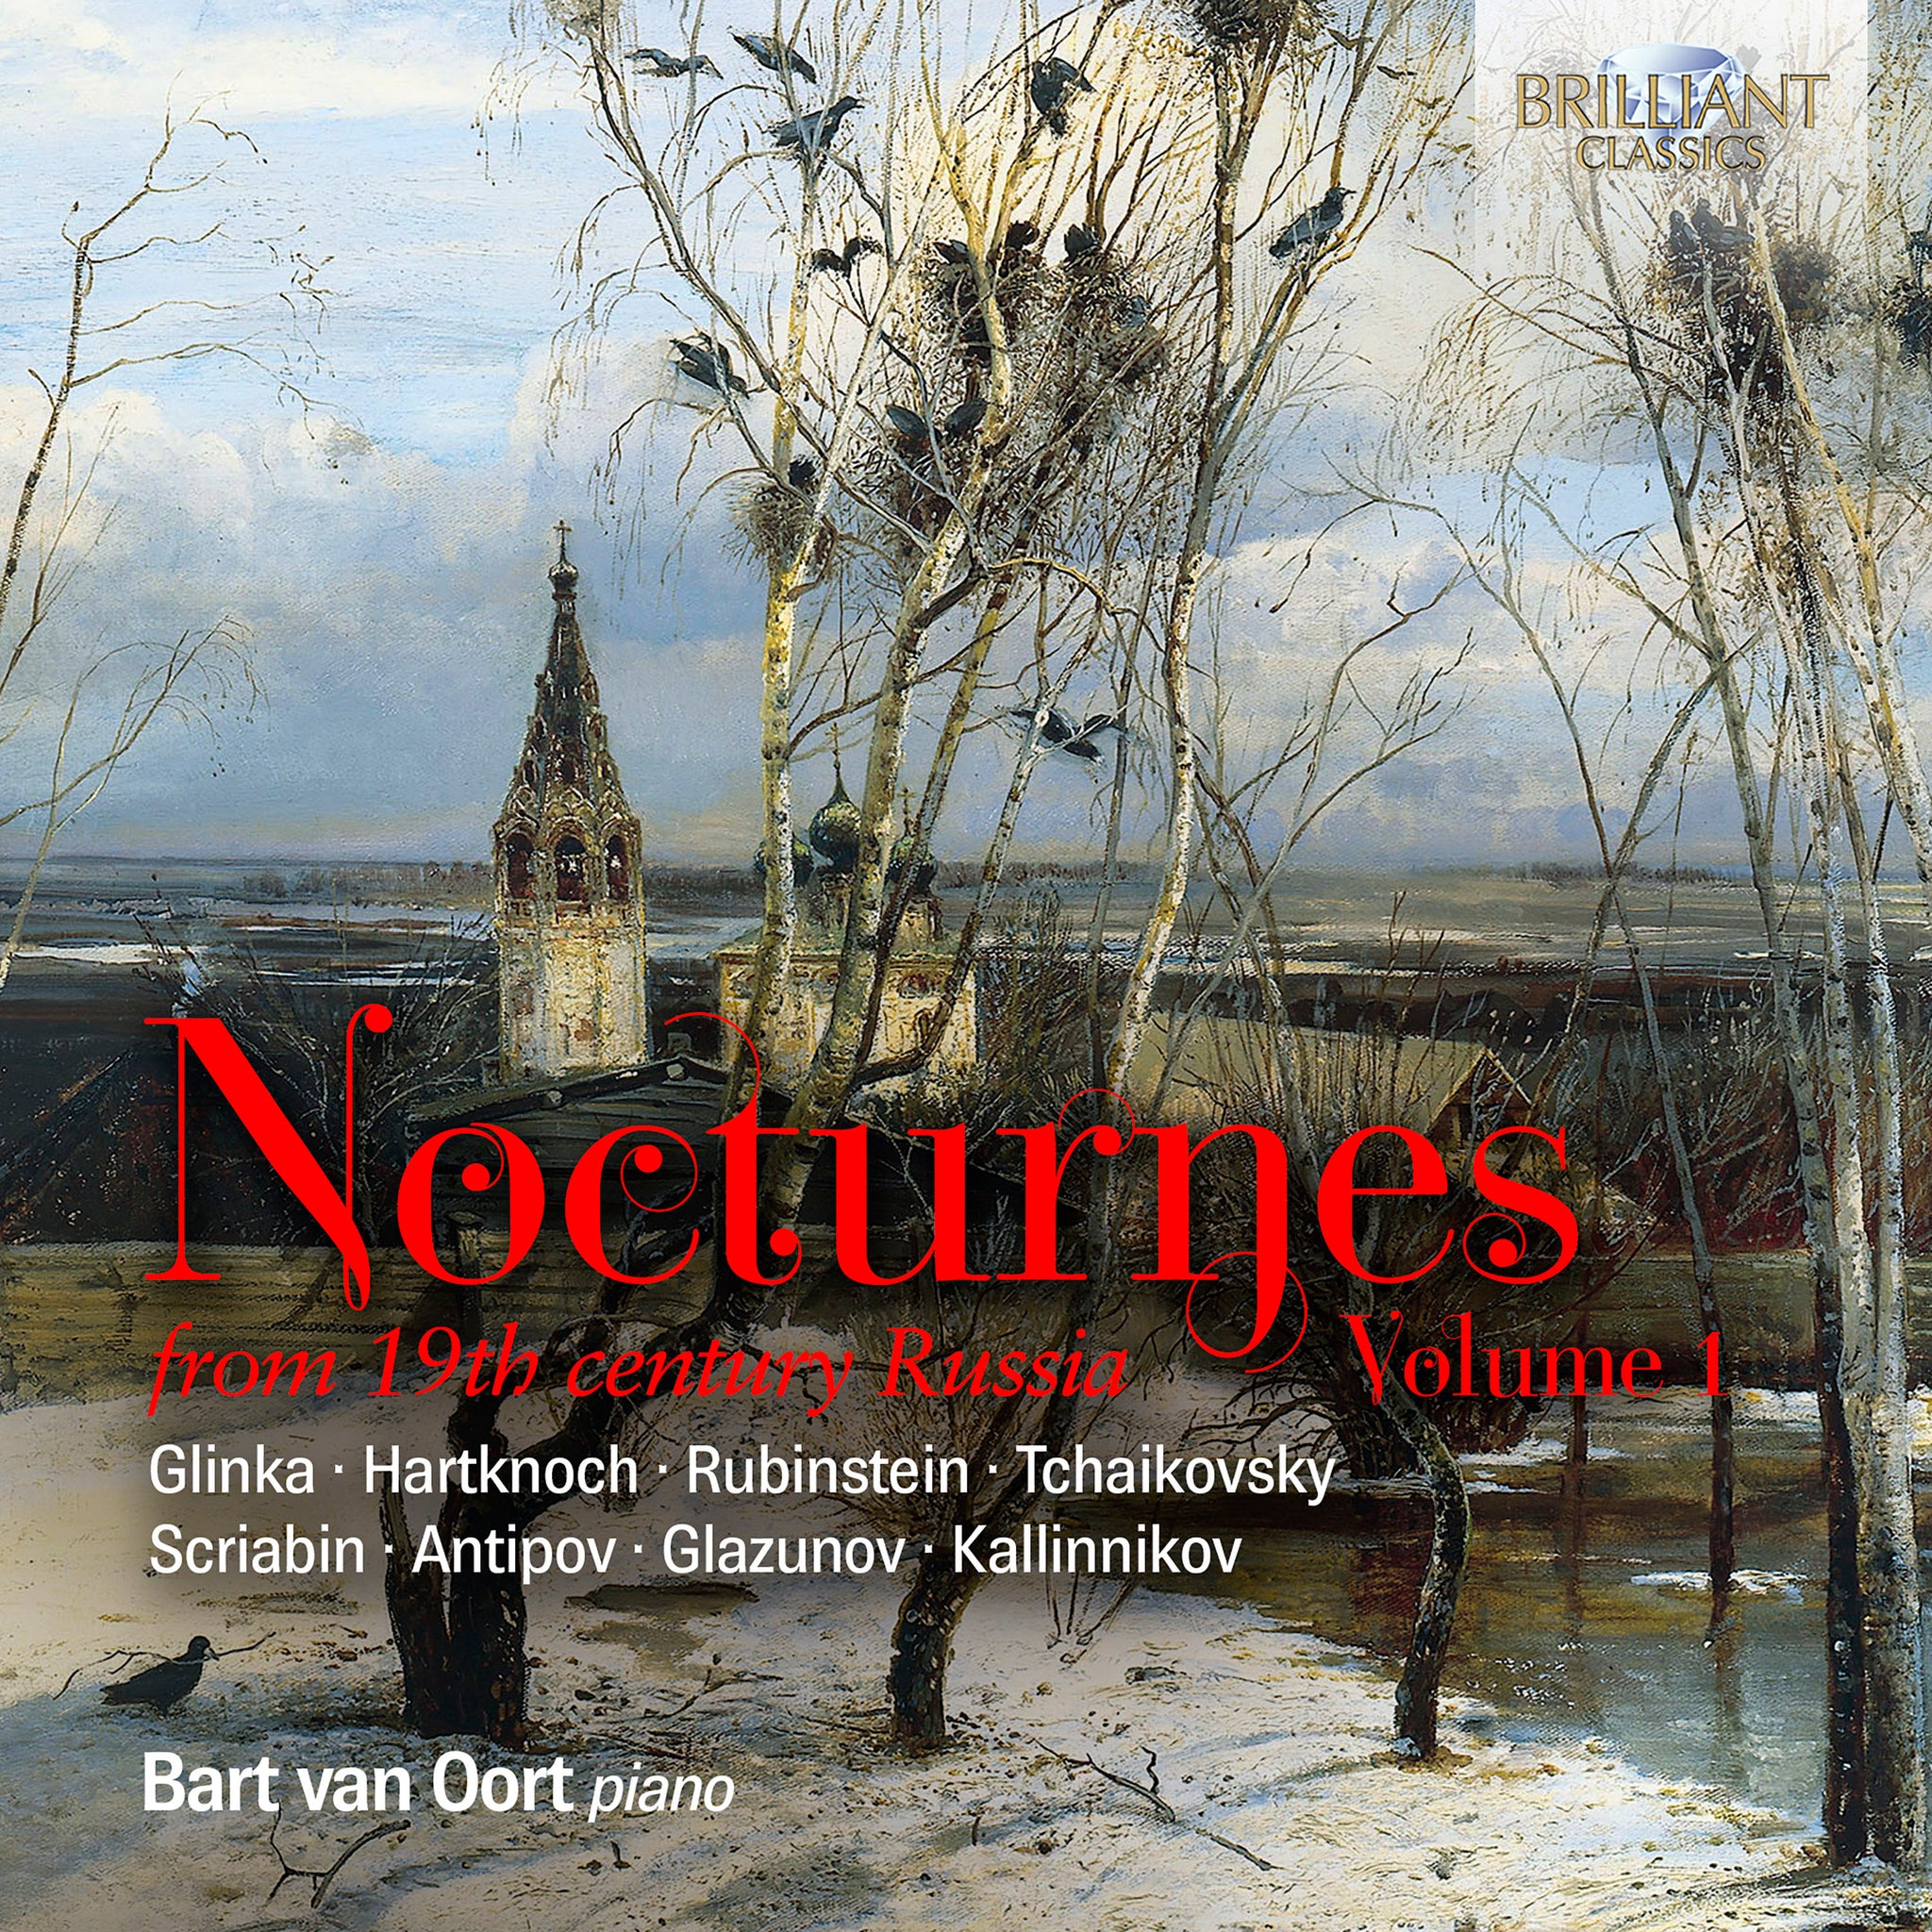 Nocturnes from 19th Century Russia, Vol. 1 / Bart van Oort